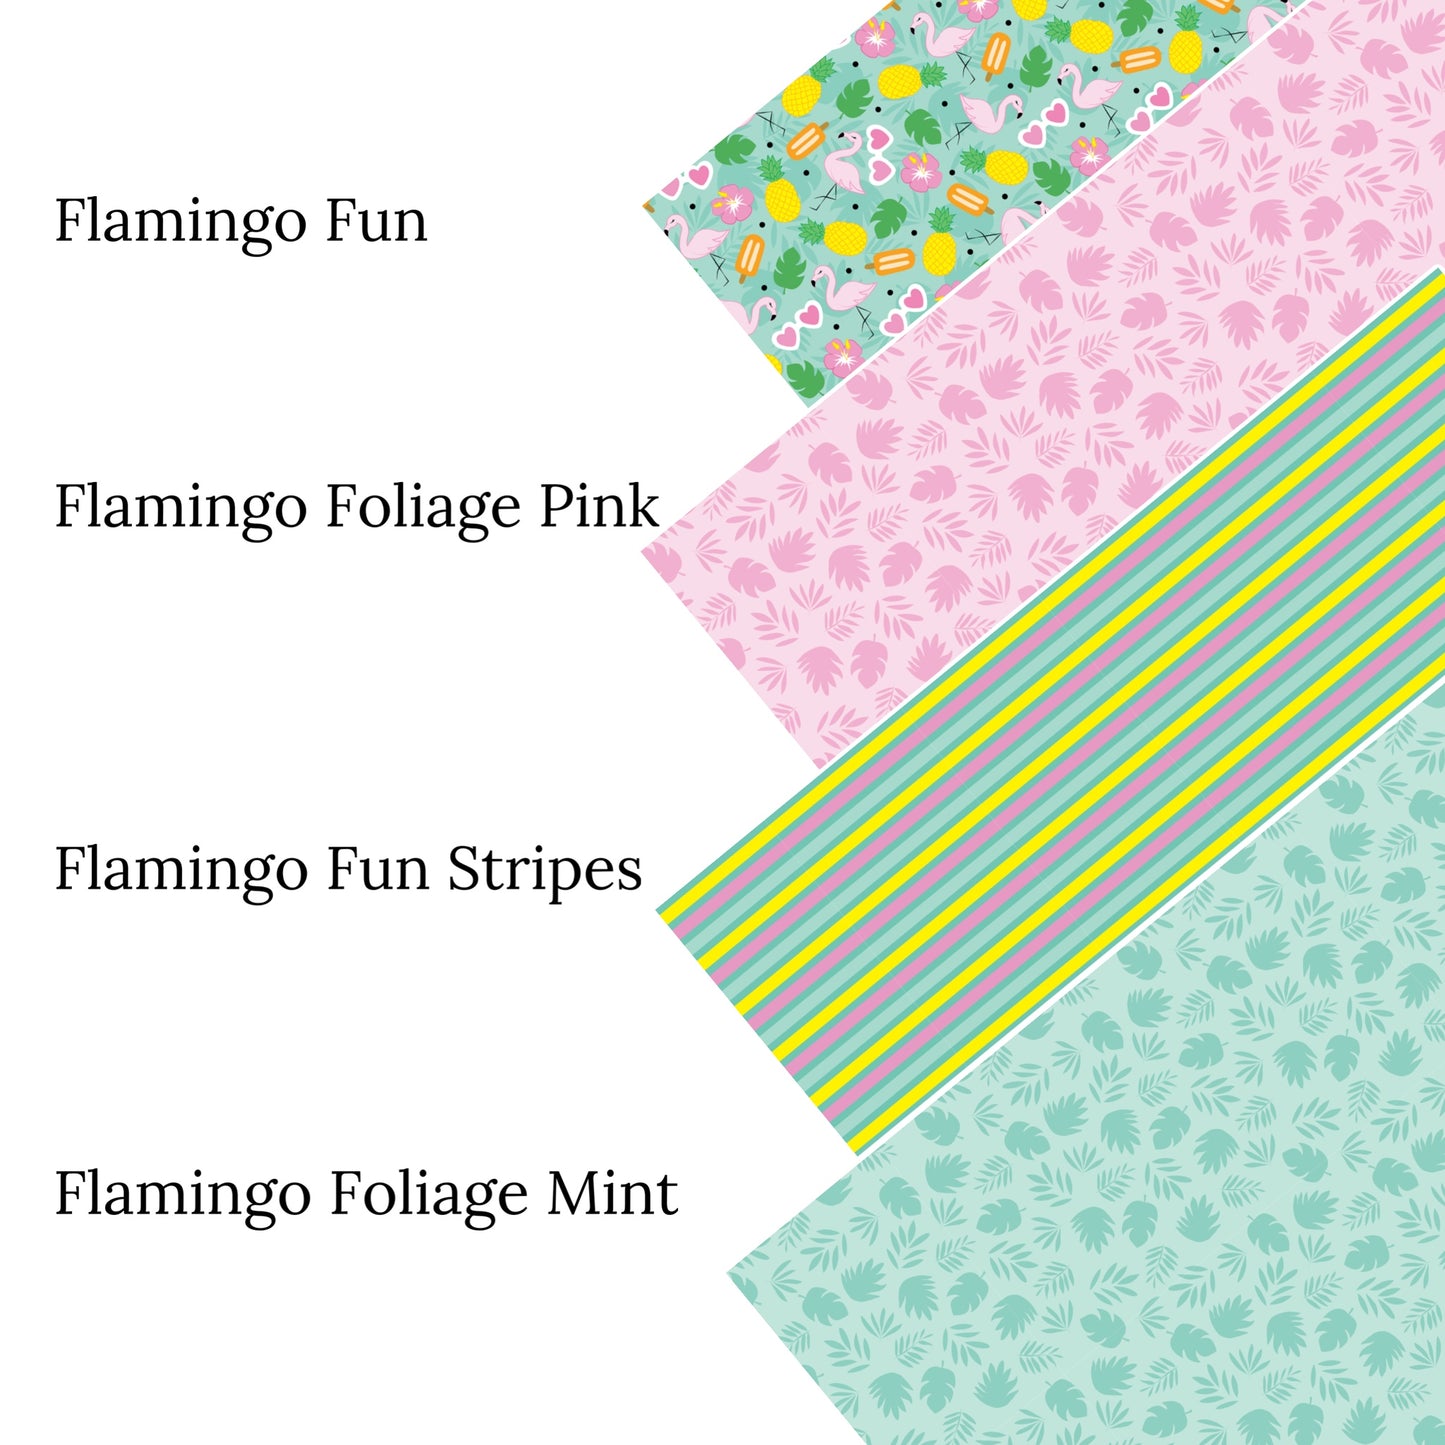 Flamingo Foliage Mint Faux Leather Sheets